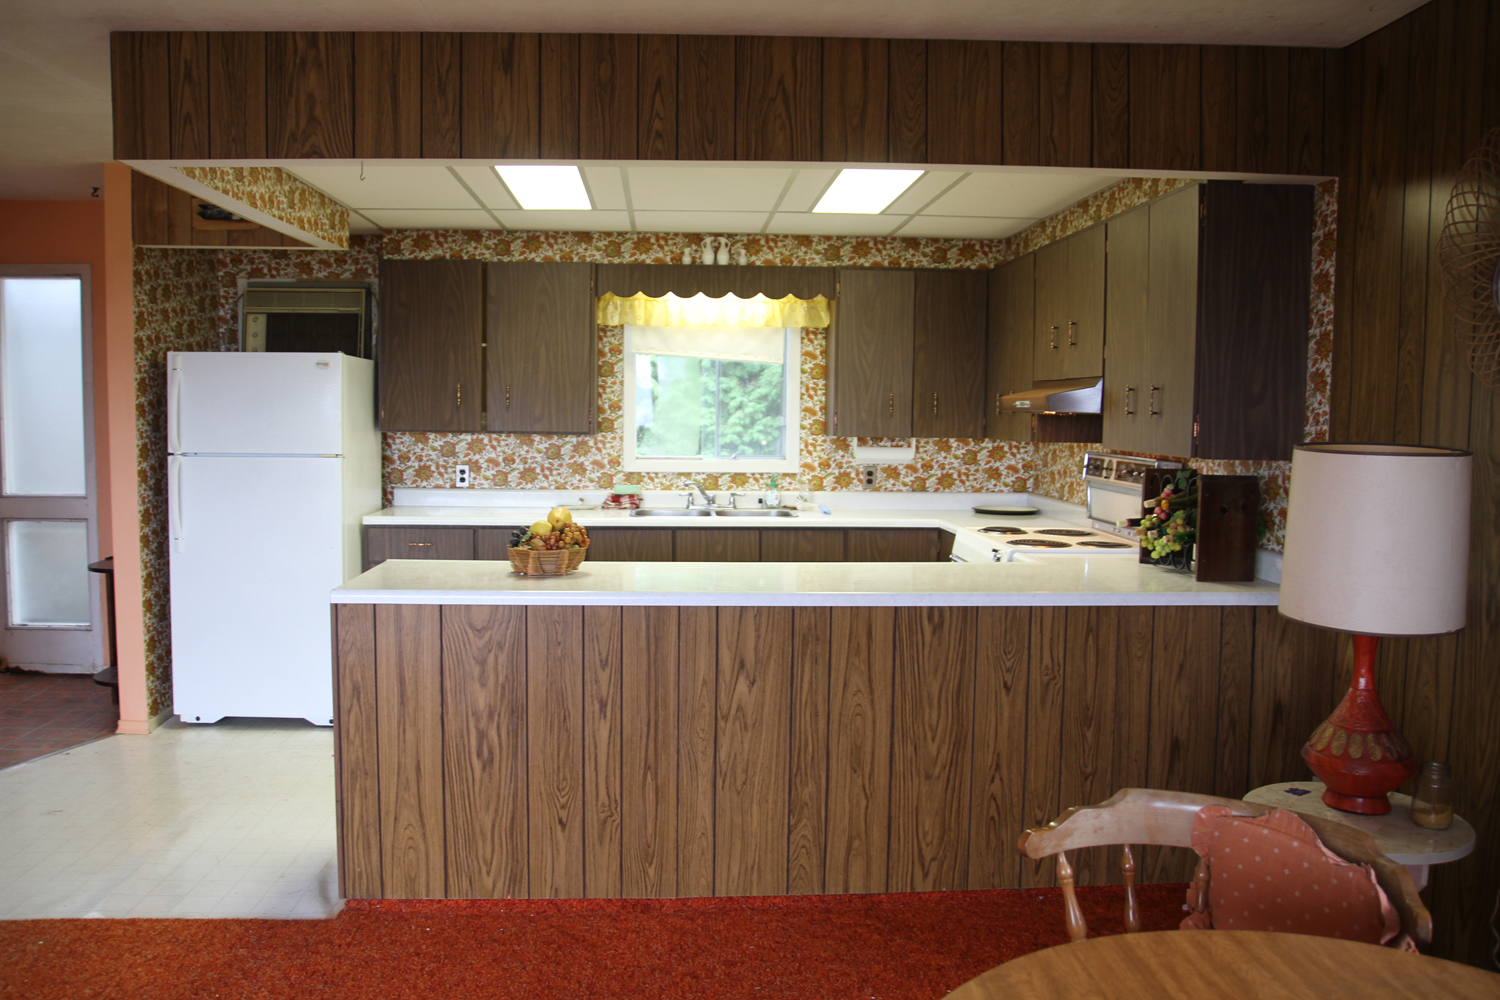 Retro kitchen with wallpaper backsplash